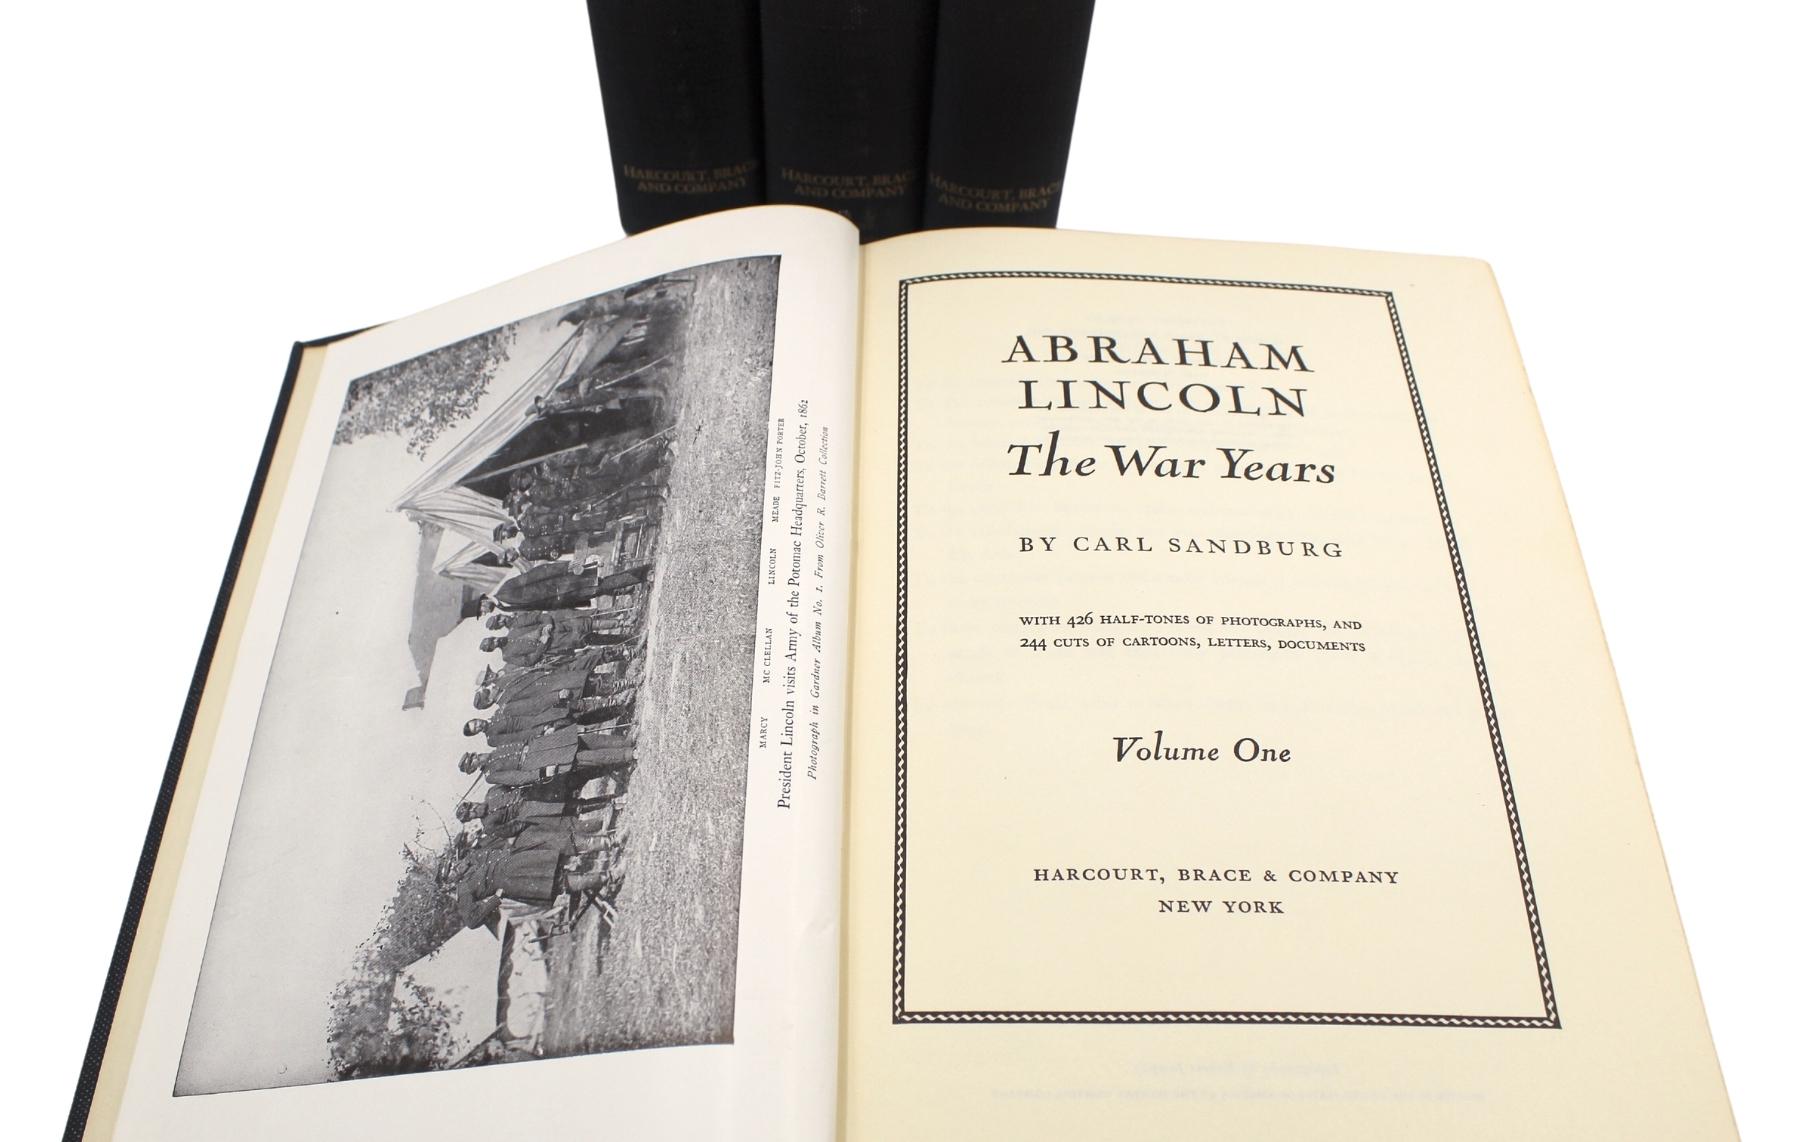 American Abraham Lincoln: The War Years by Carl Sandburg, Four Vol Set, First Trade Ed.